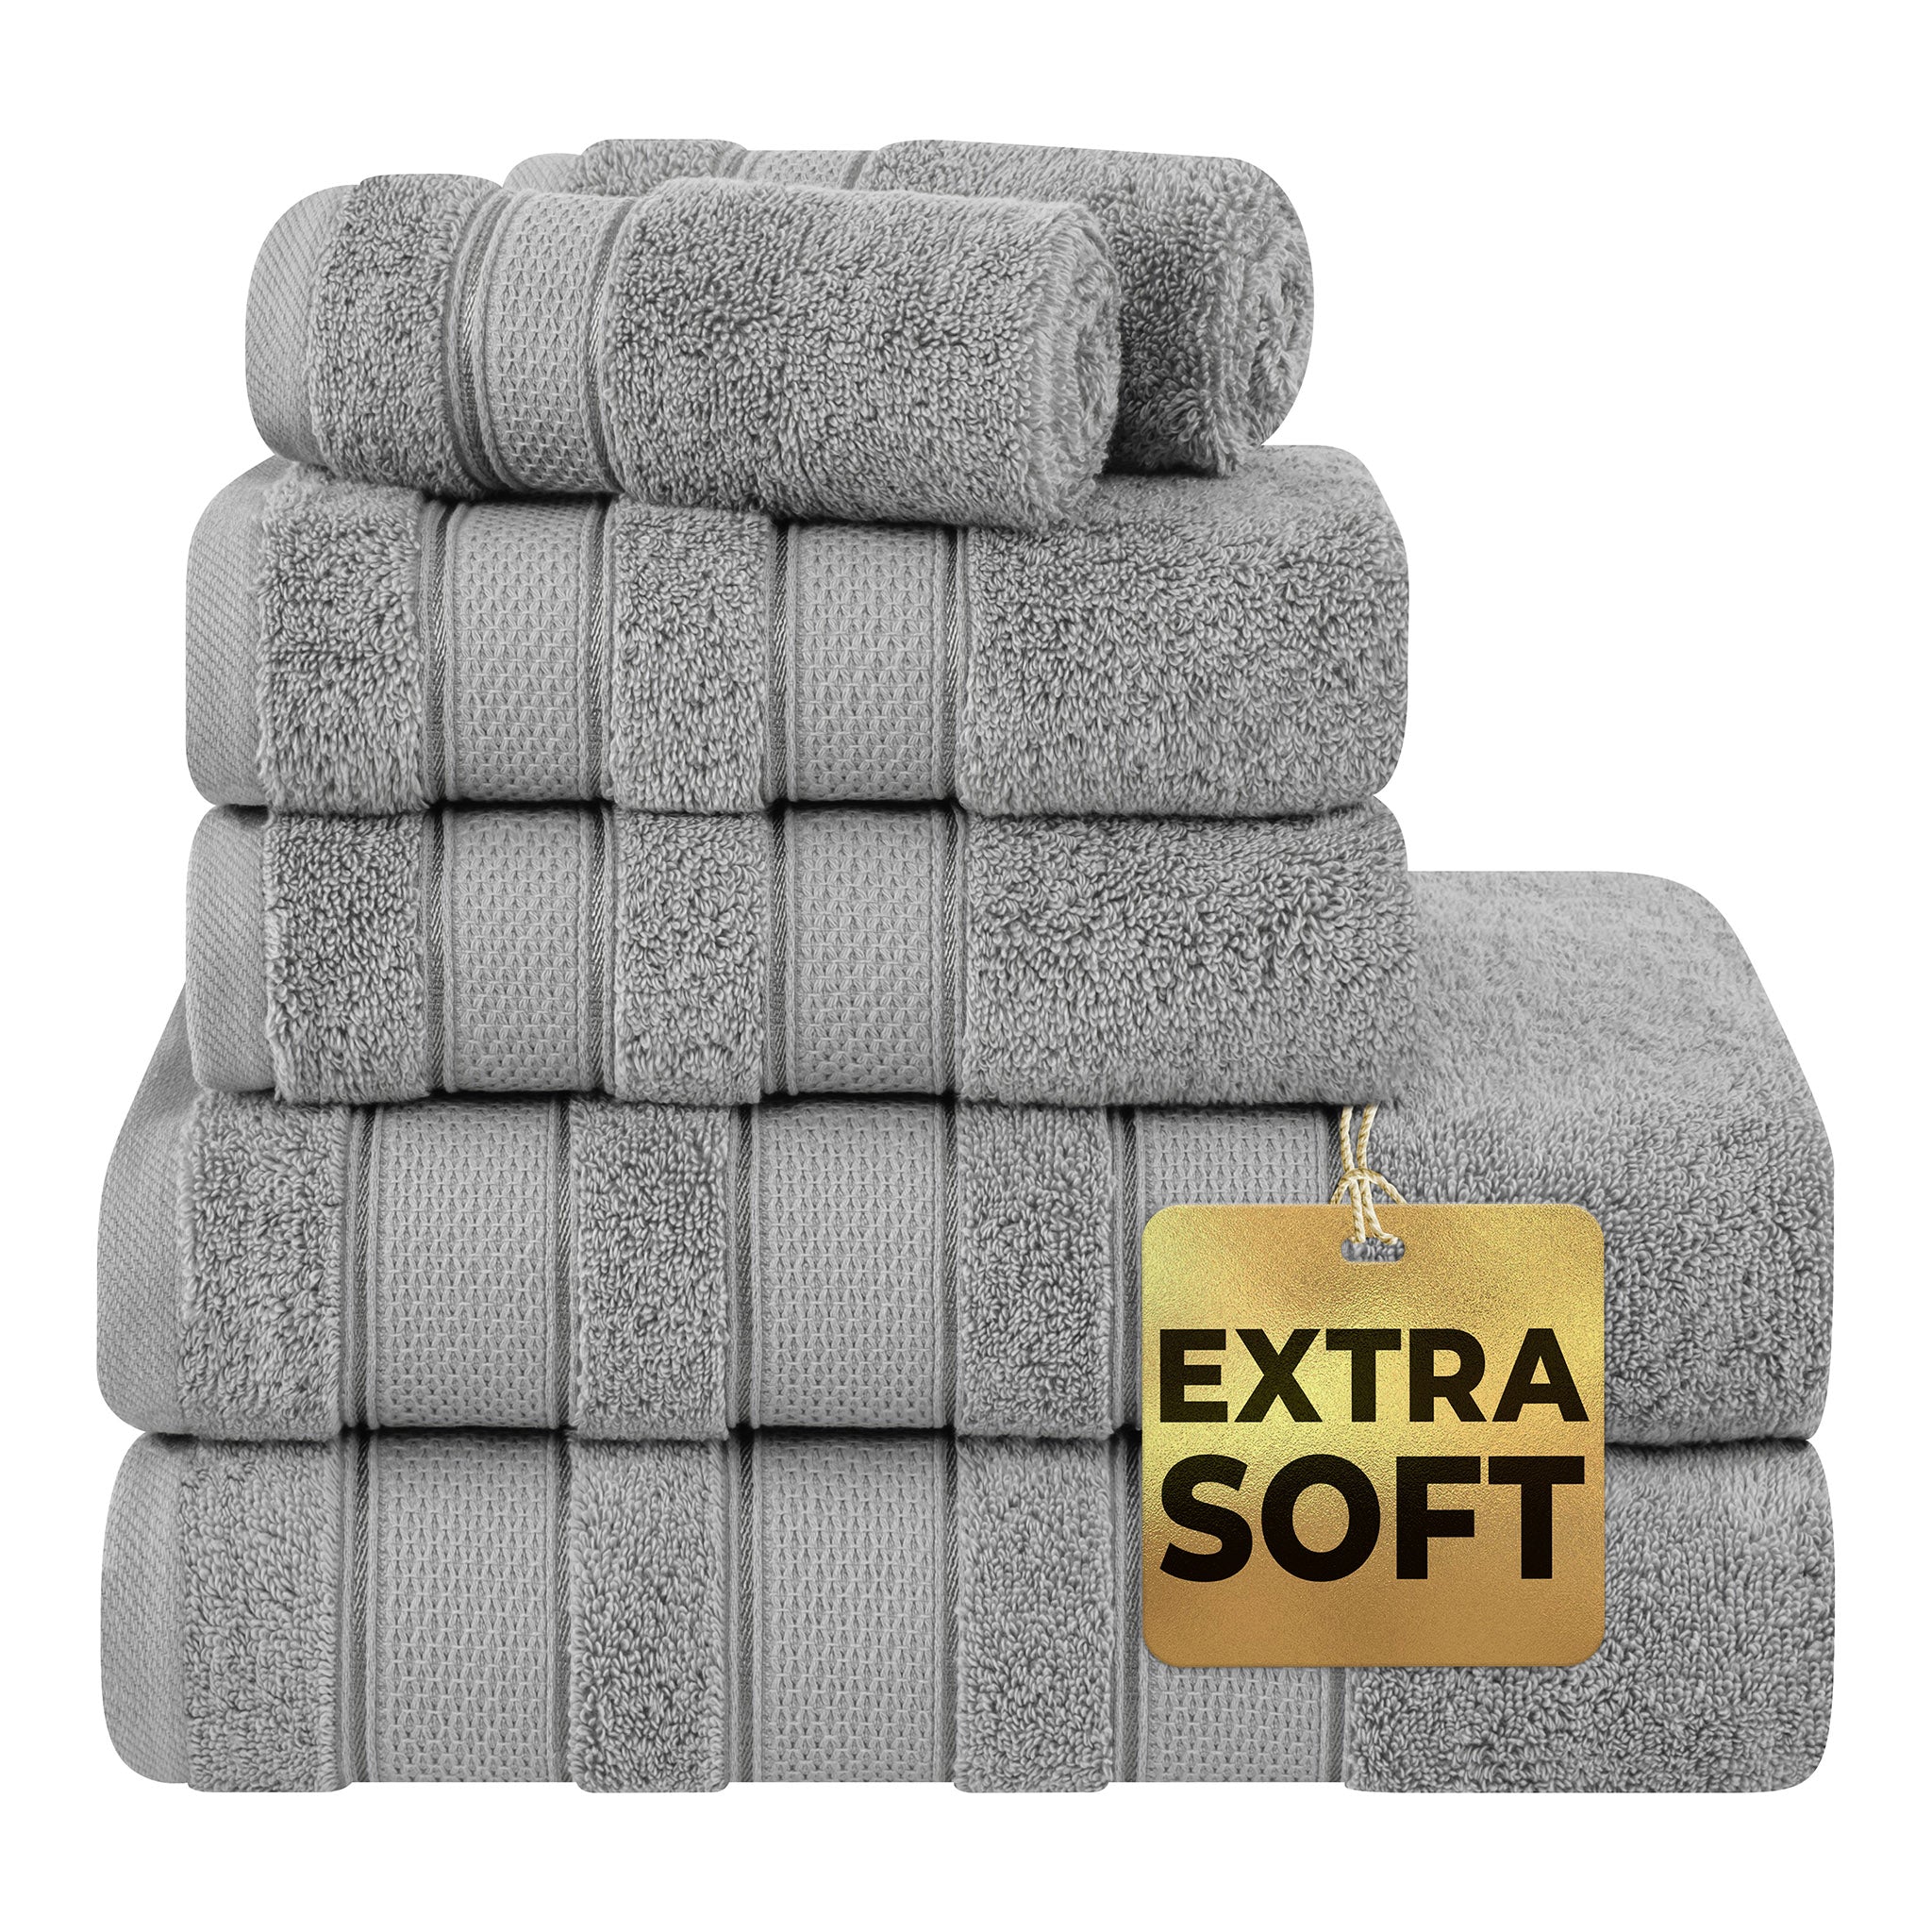 Bennett and Shea 8-Piece Luxury Bath Towel Set, 100% Turkish Cotton Loops,  Premi